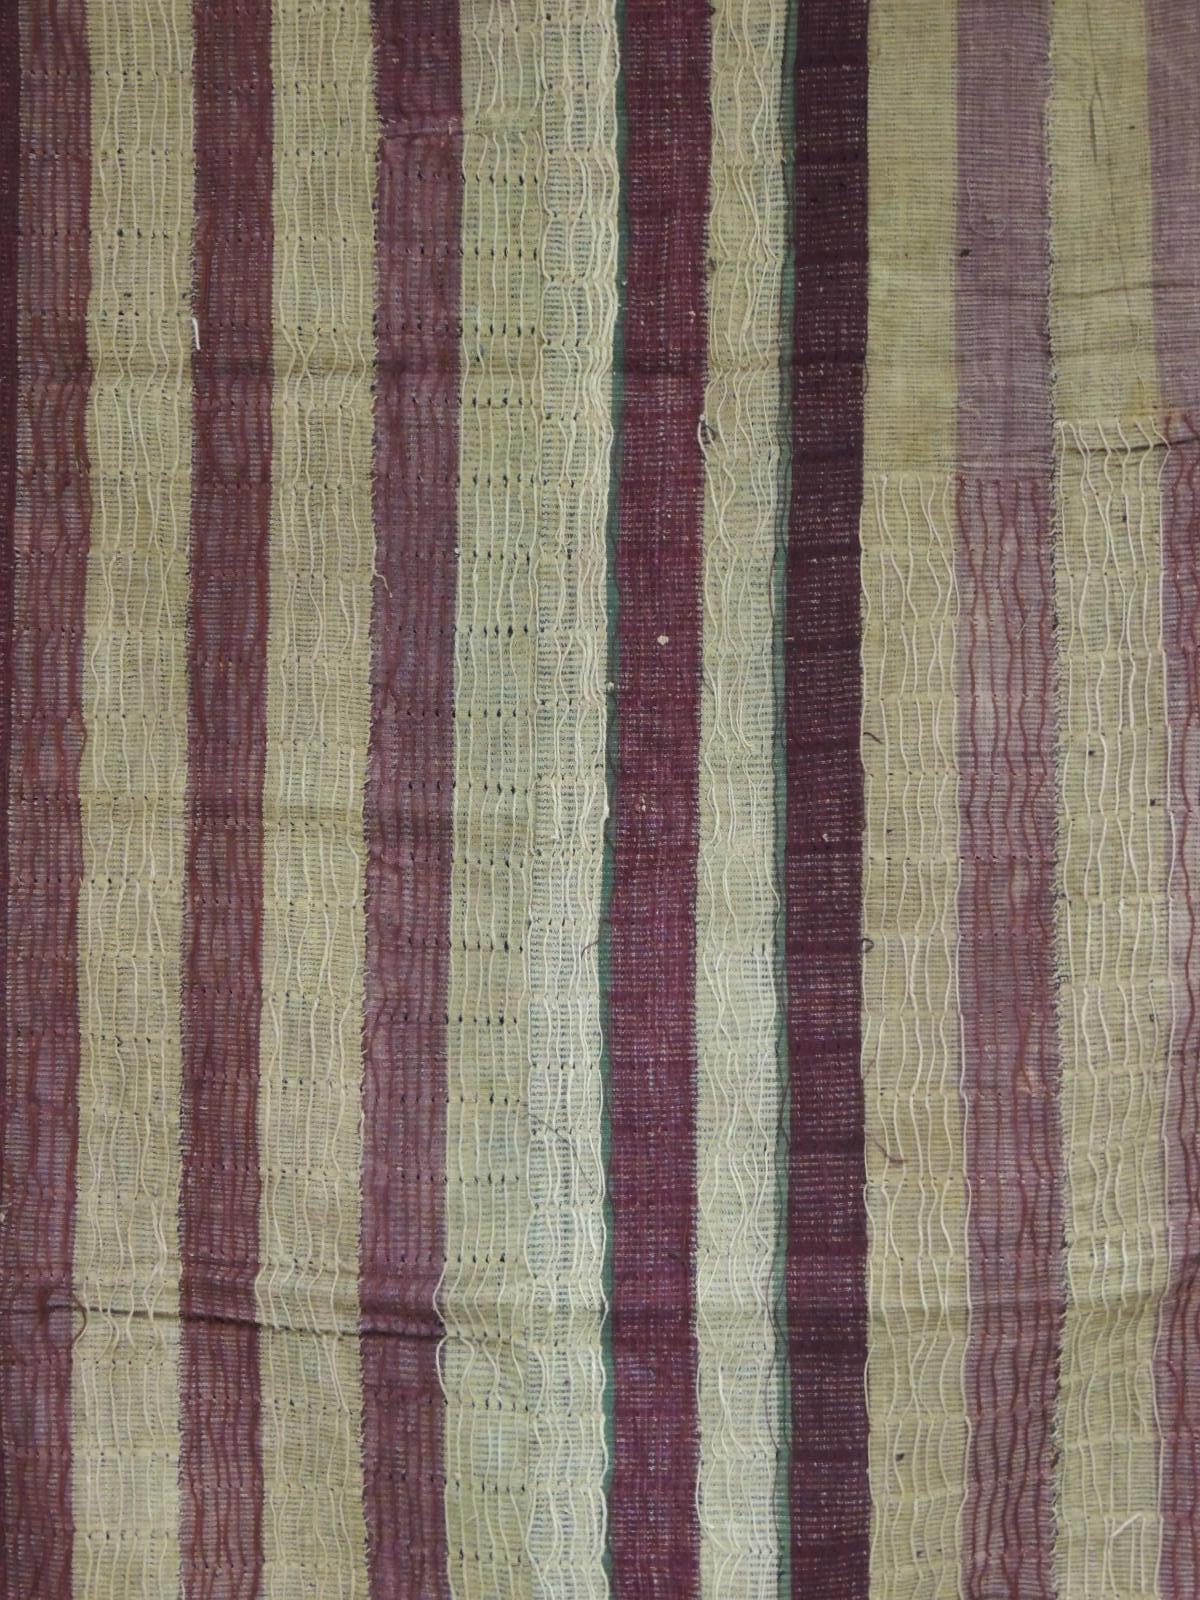 Tribal Large Vintage Purple and Brown Yoruba Stripe African Textile